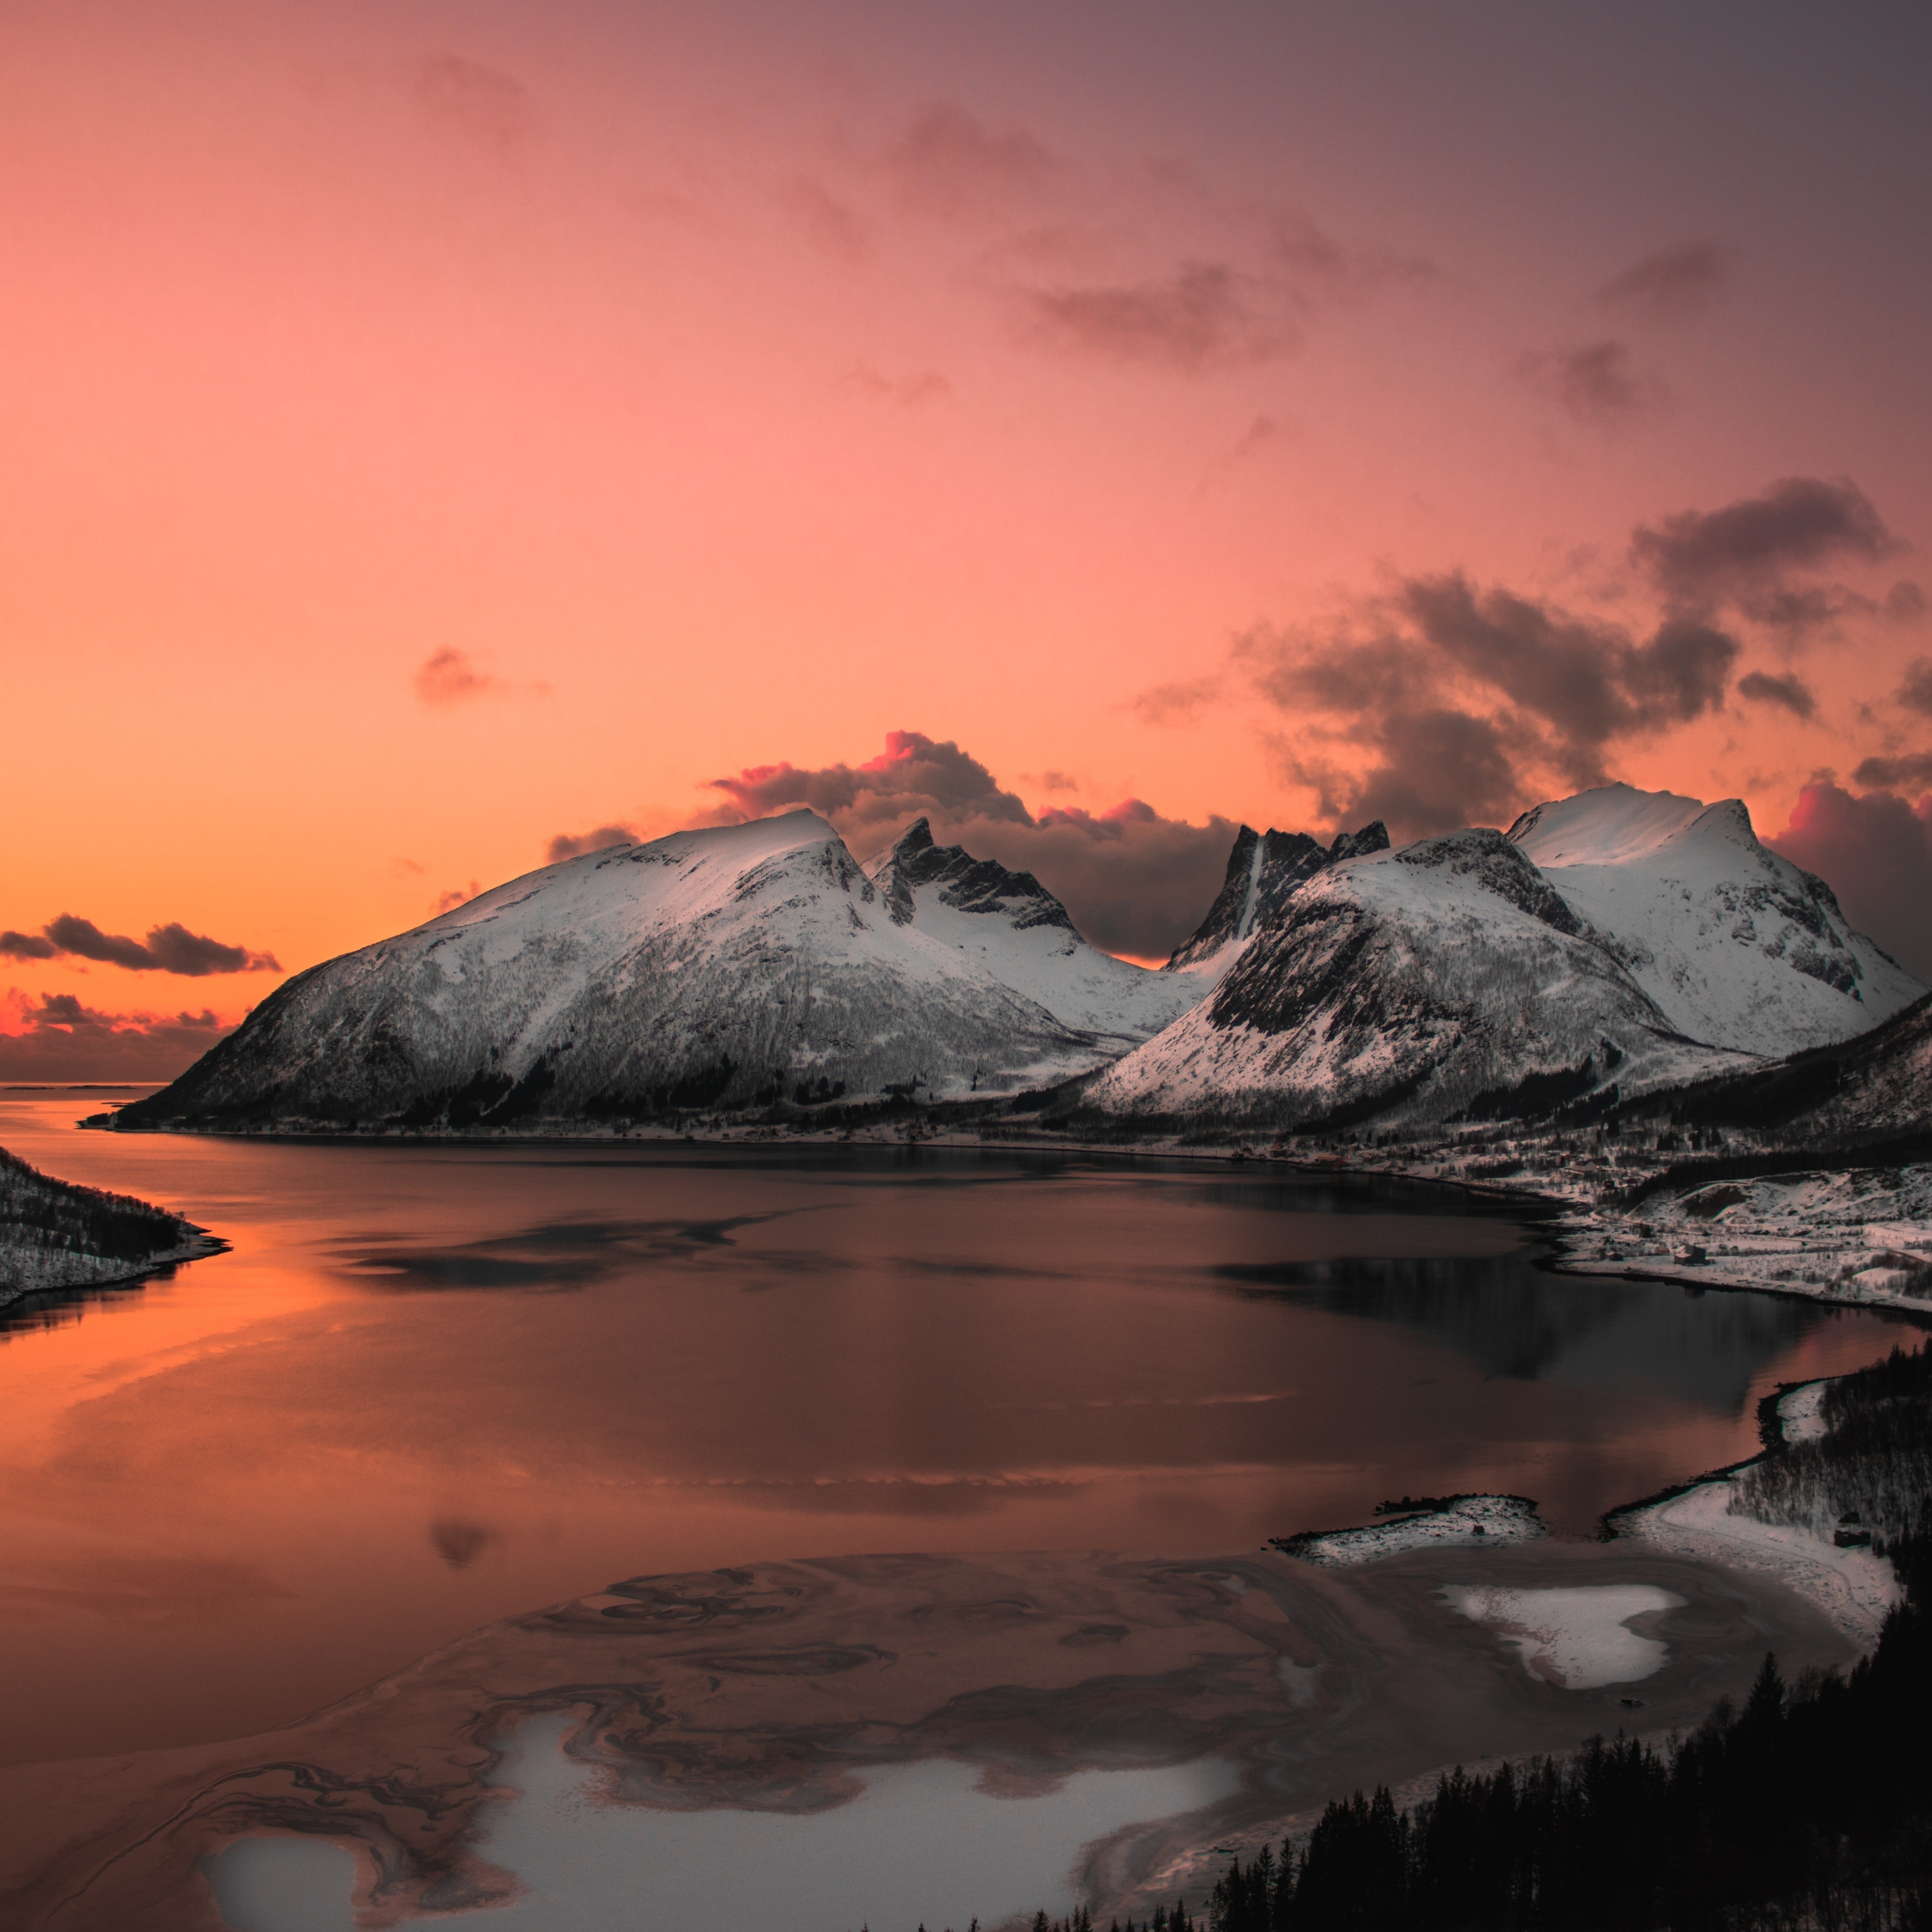 Download wallpaper 2932x2932 lake, mountains, sunset, nature, ipad pro  retina, 2932x2932 hd background, 20142